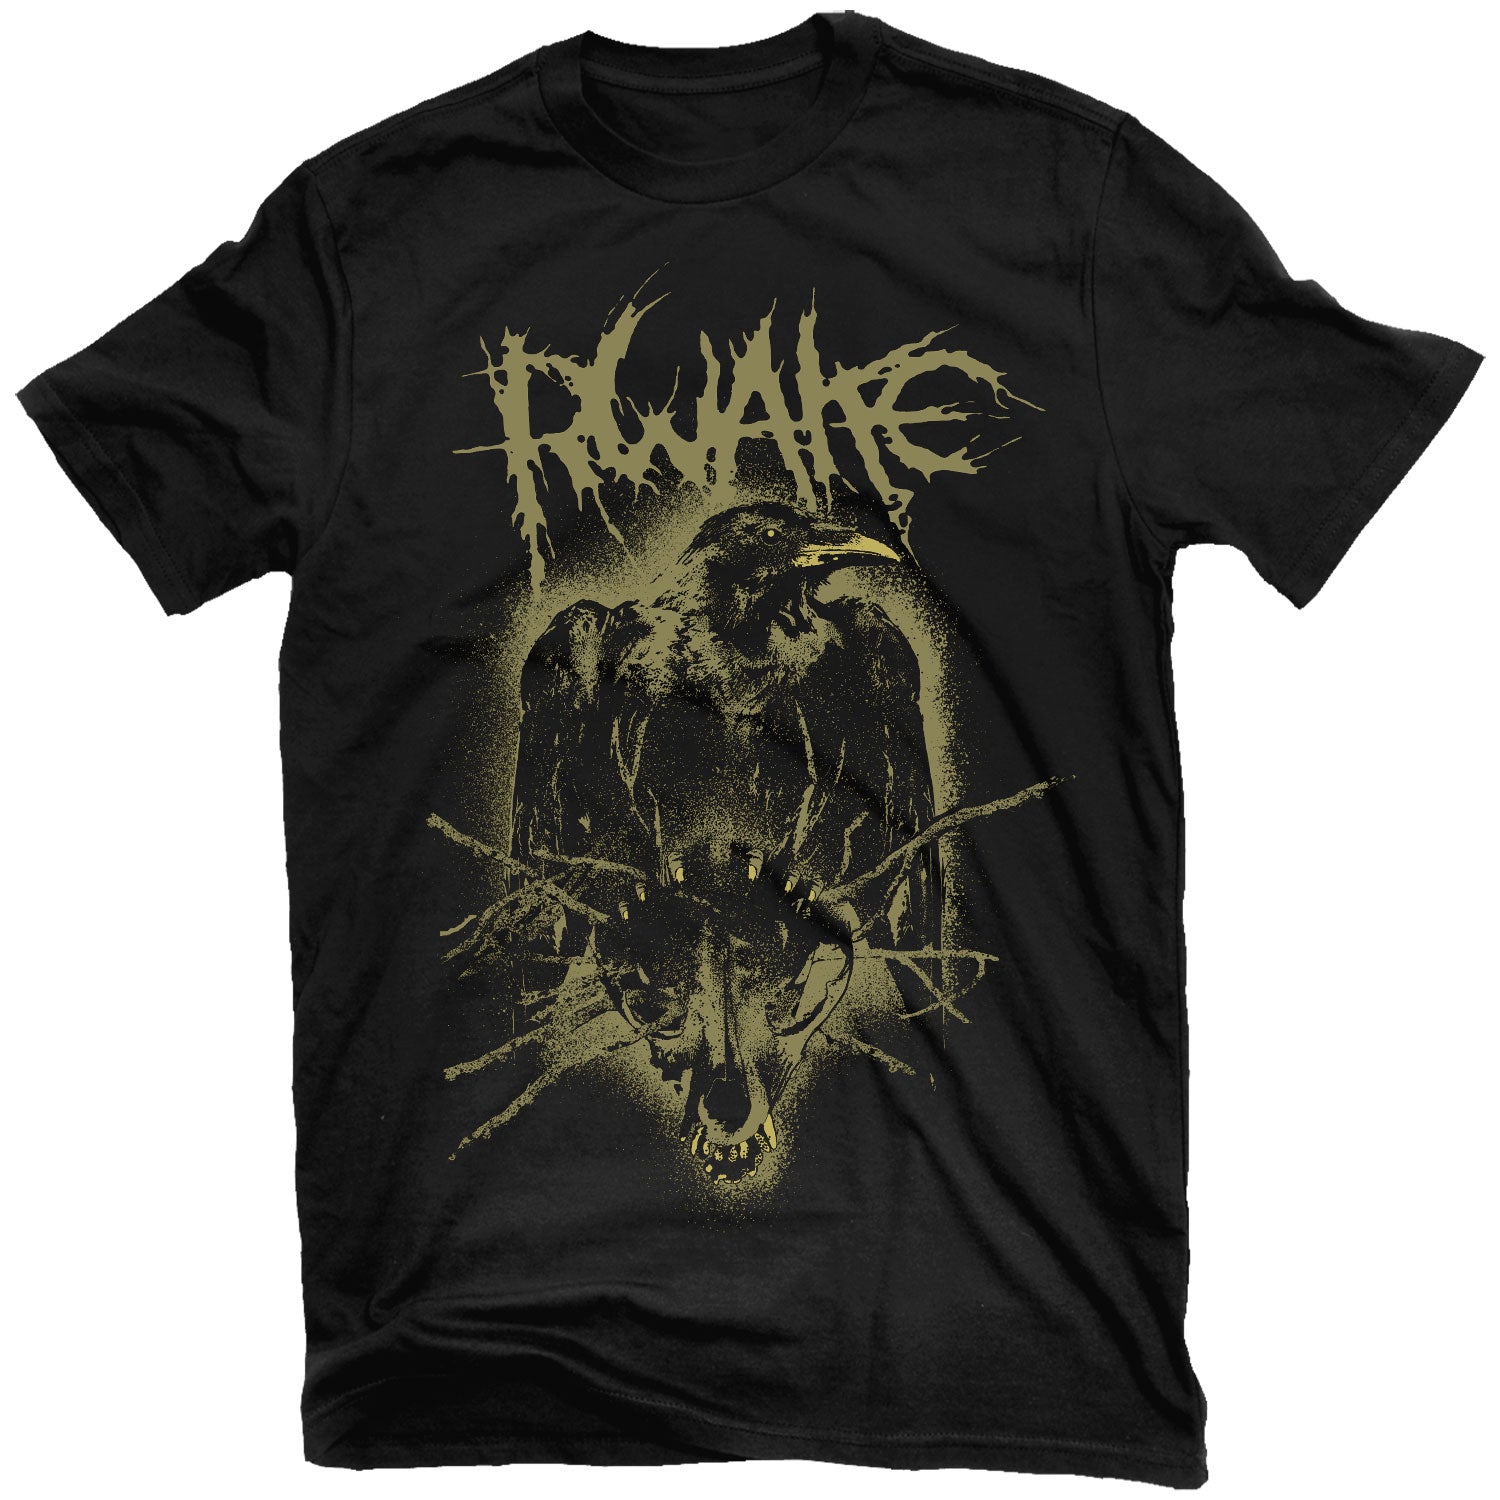 Rwake "Rest" T-Shirt